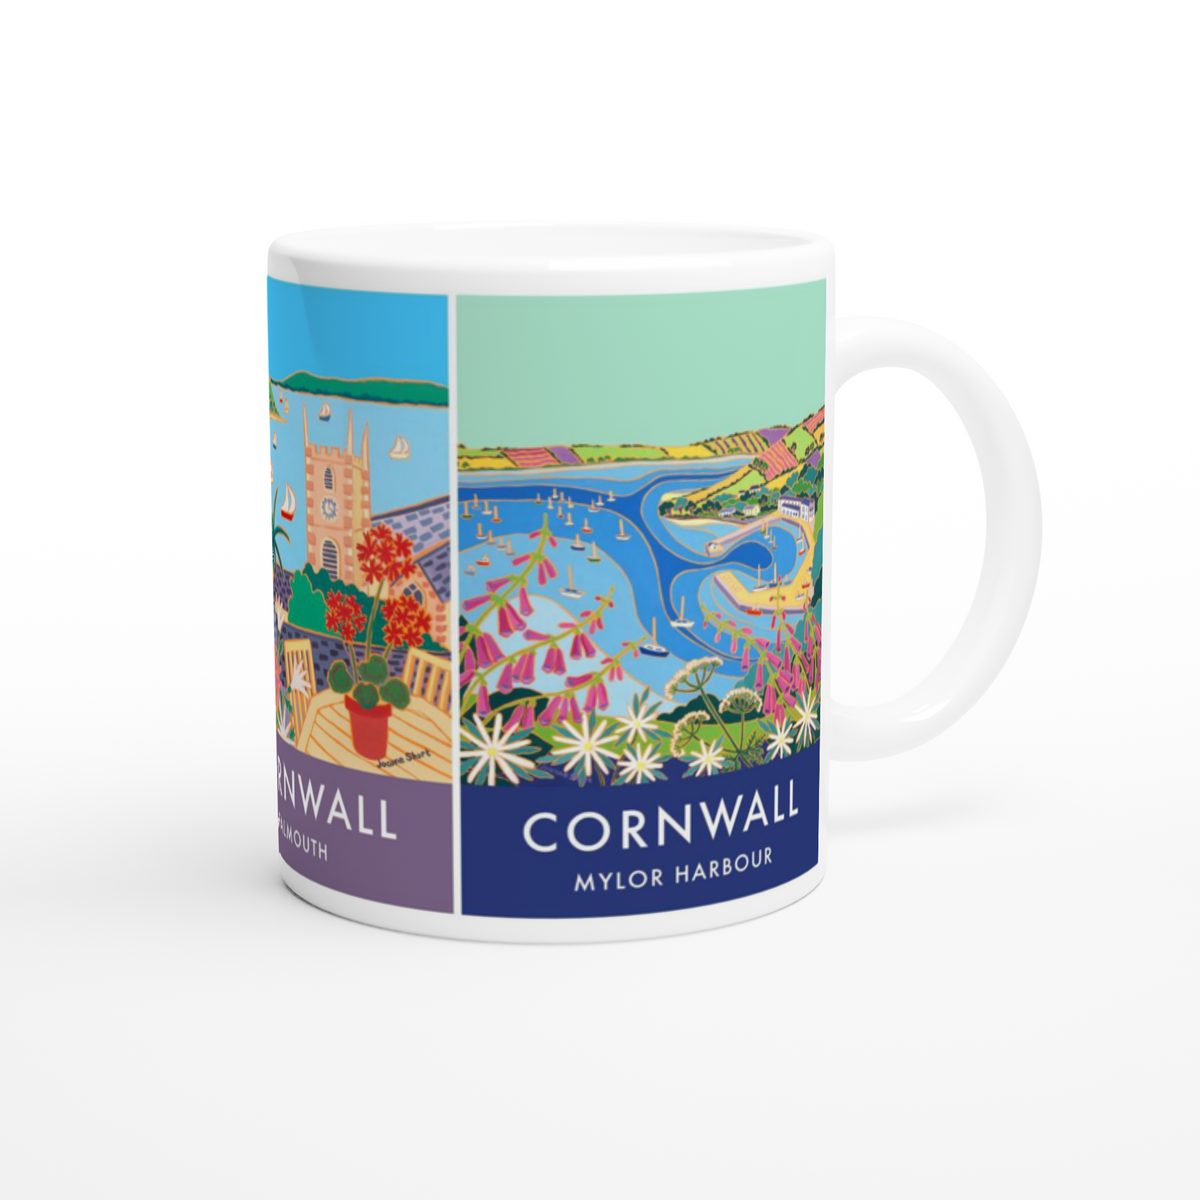 Joanne Short Ceramic Cornish Art Mug featuring Falmouth Harbour and Mylor